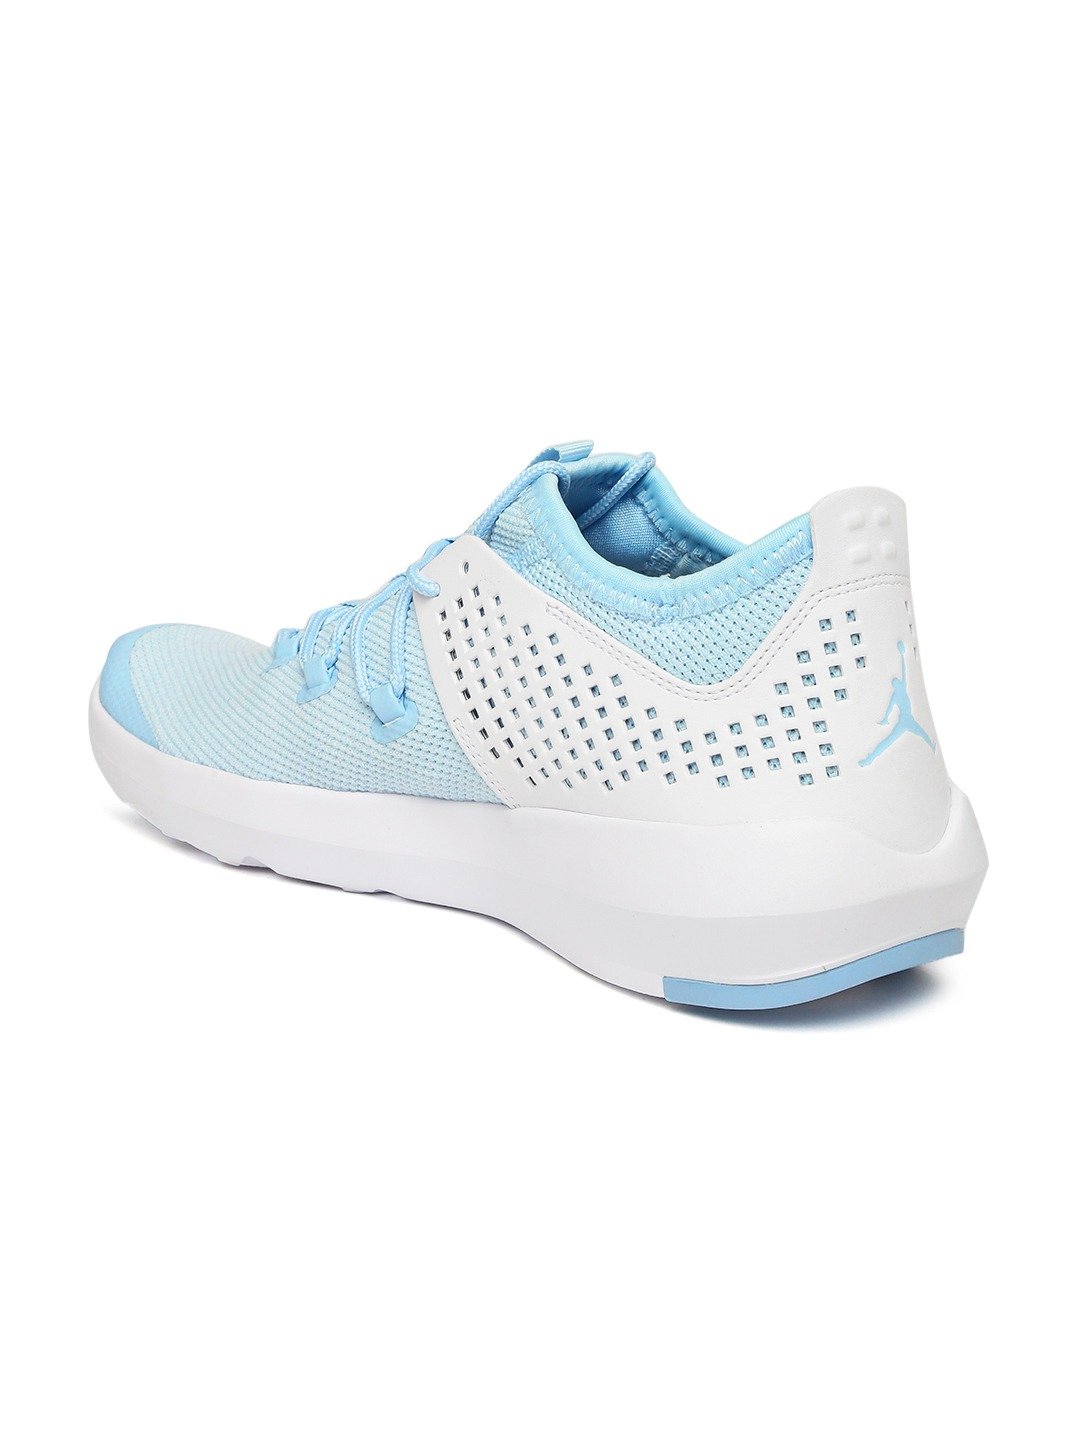 Men Blue & White Jordan Express Sports Shoes - Discount Store